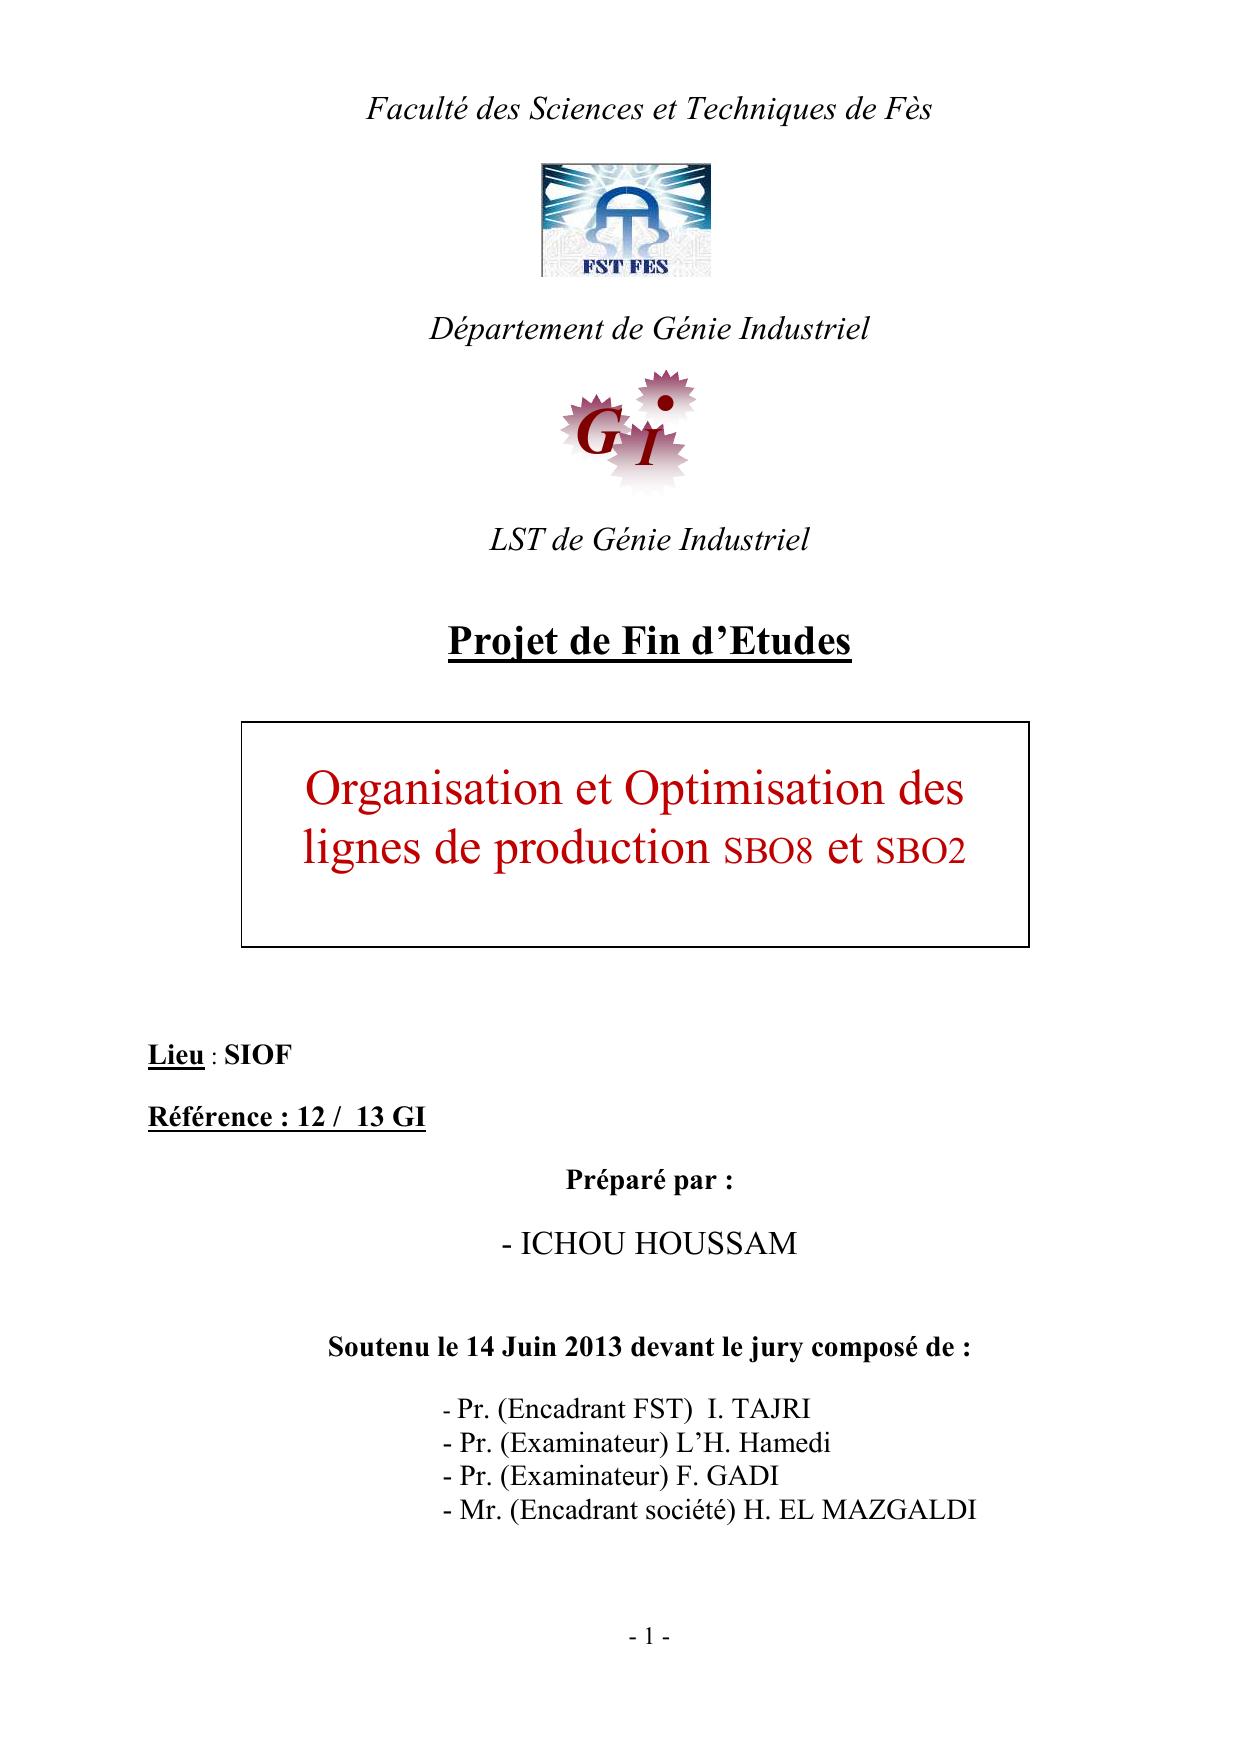 Organisation et Optimisation des lignes de production SBO8 et SBO2